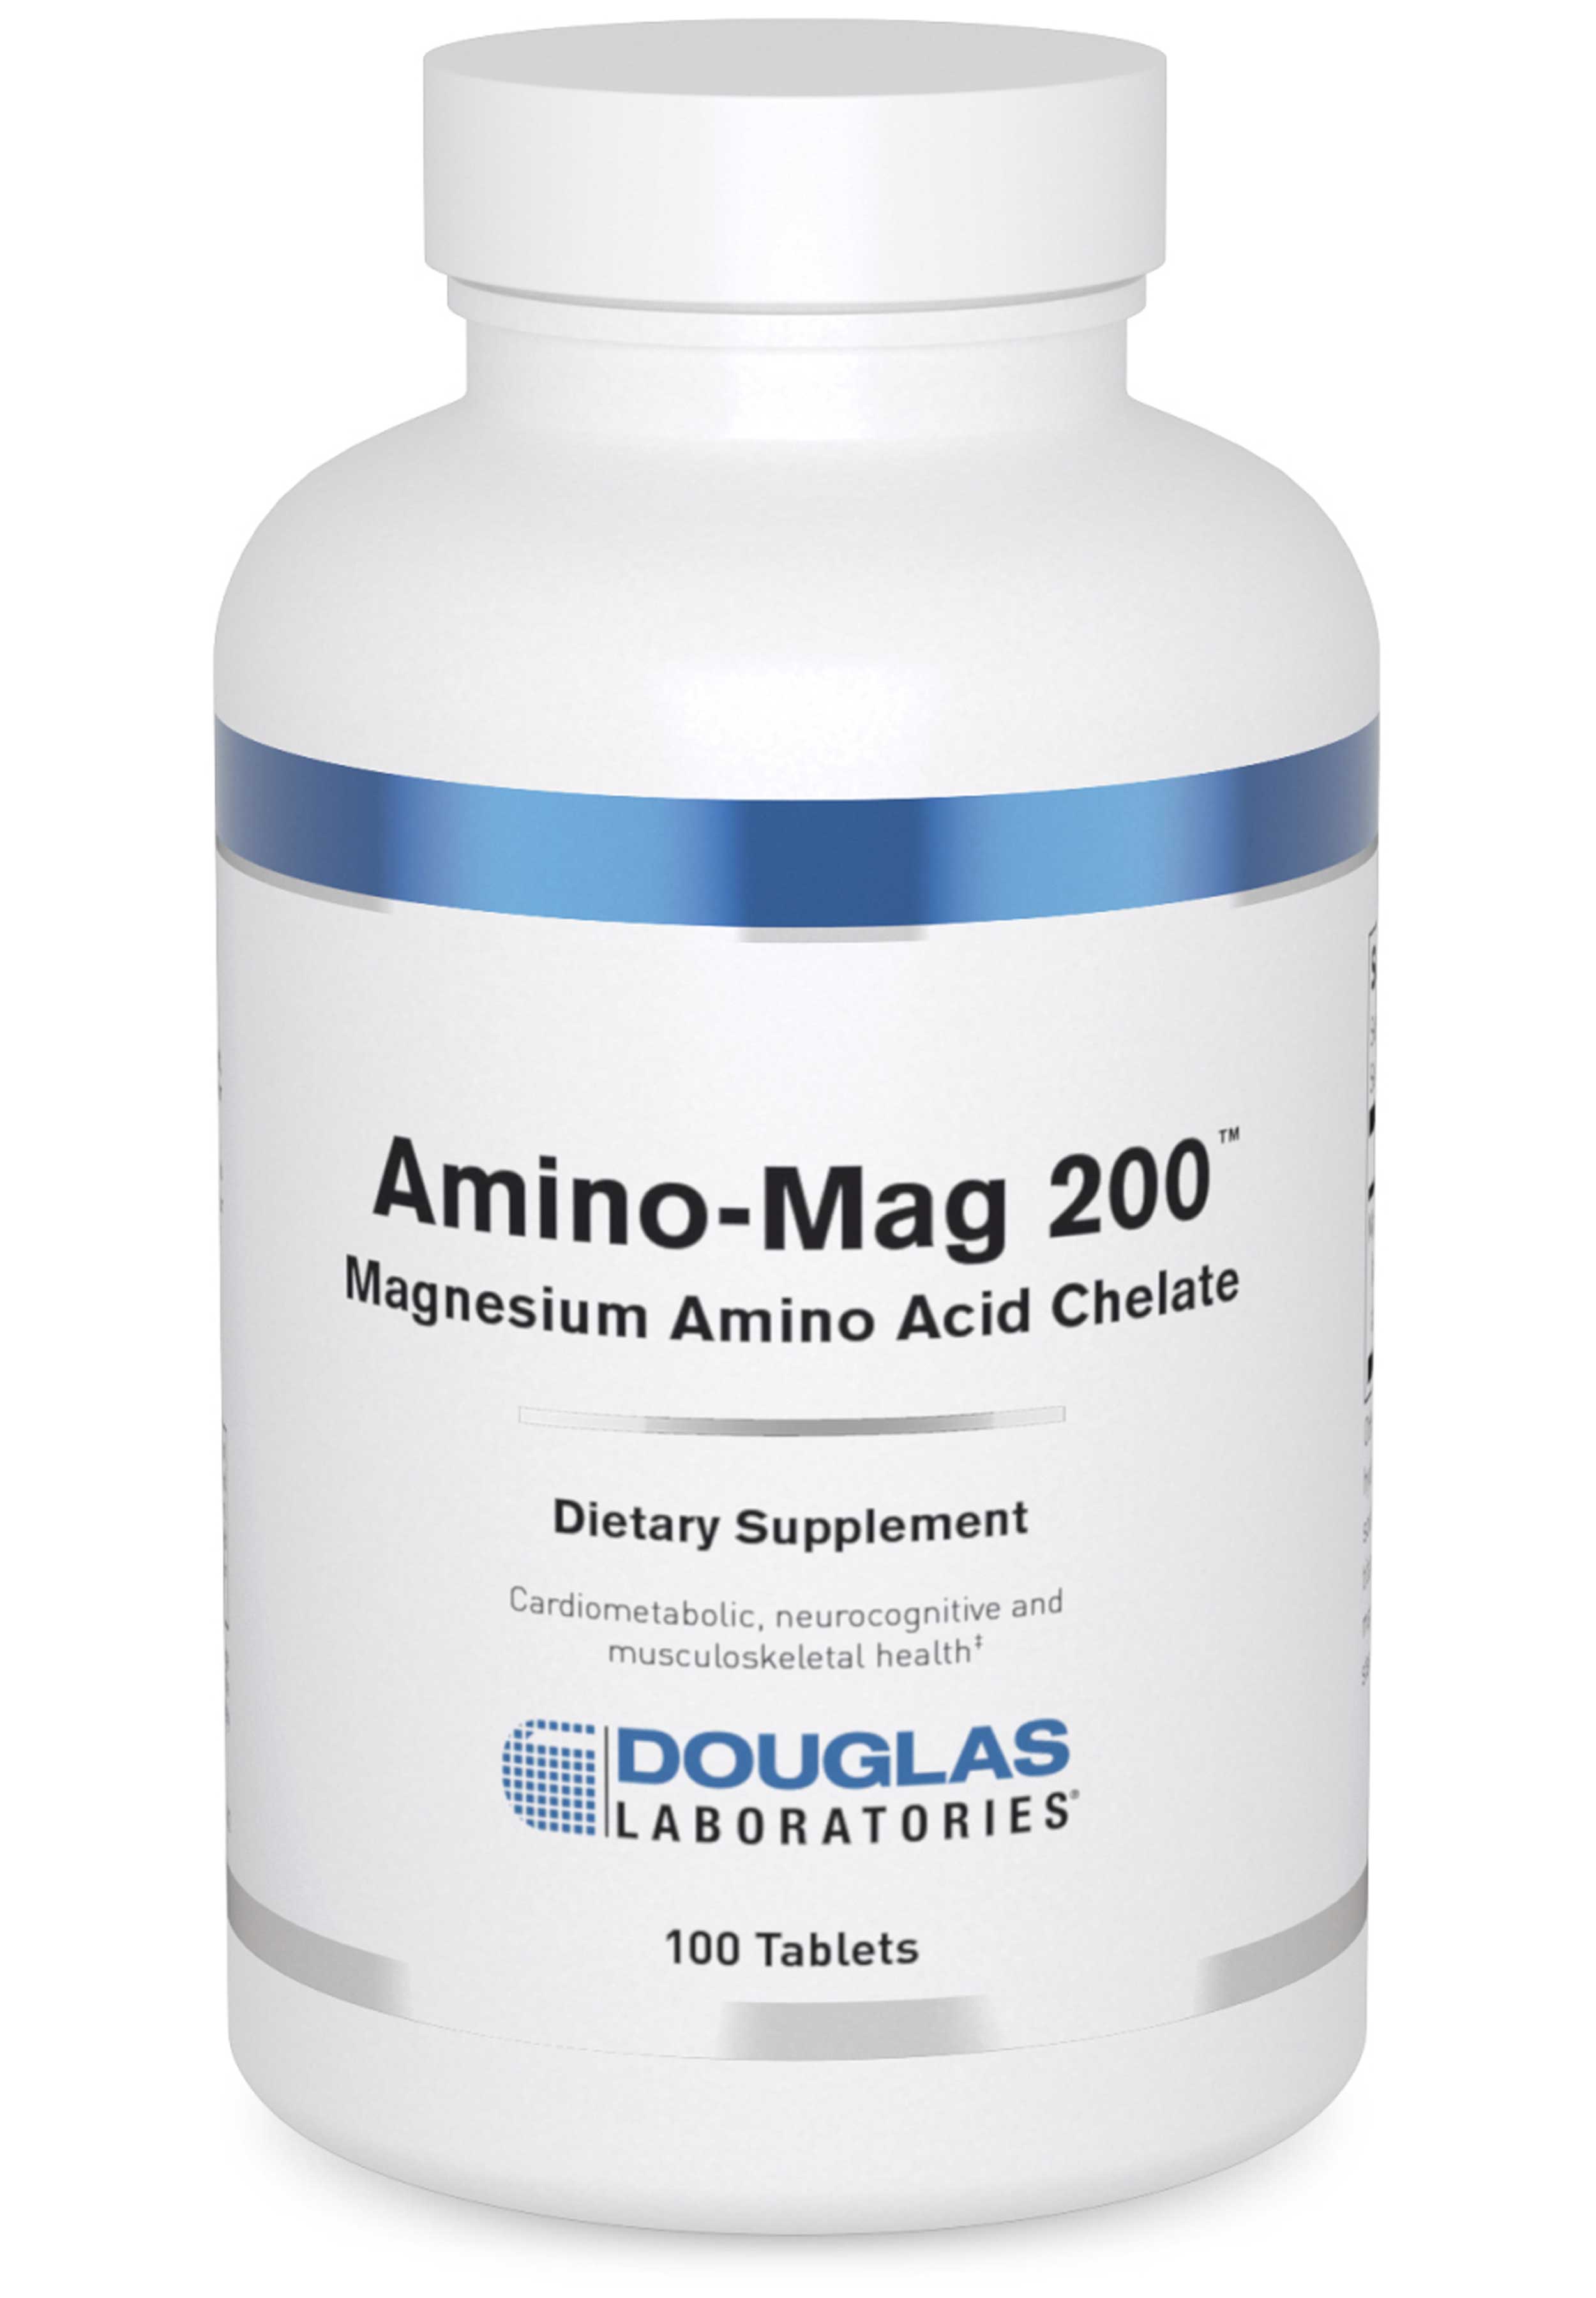 Douglas Laboratories Amino-Mag 200